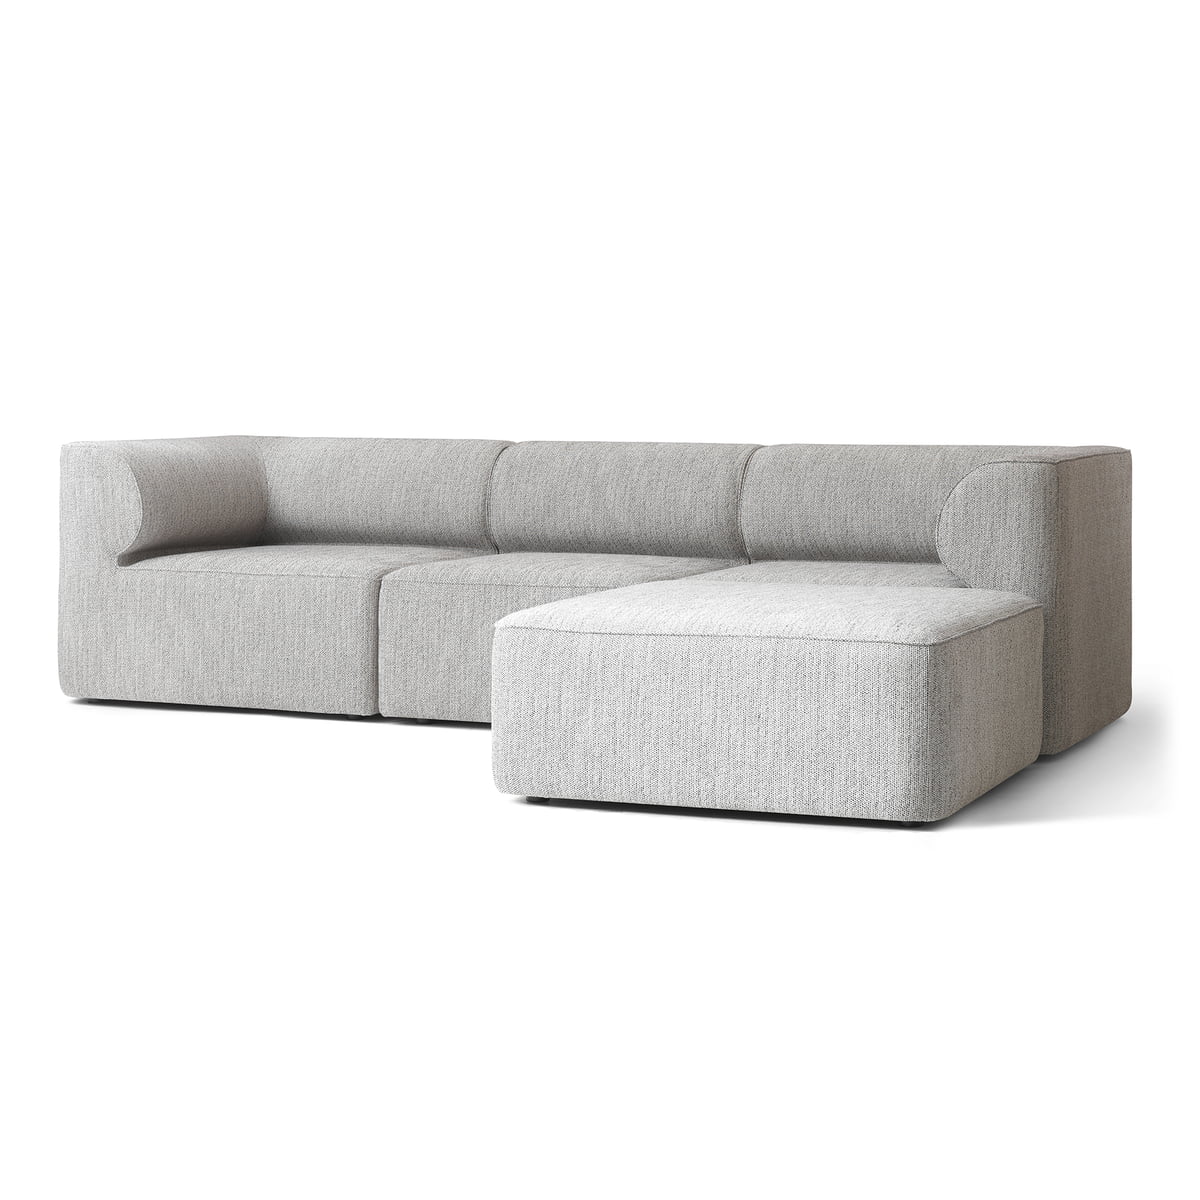 The Menu - Eave Modular Sofa in light grey